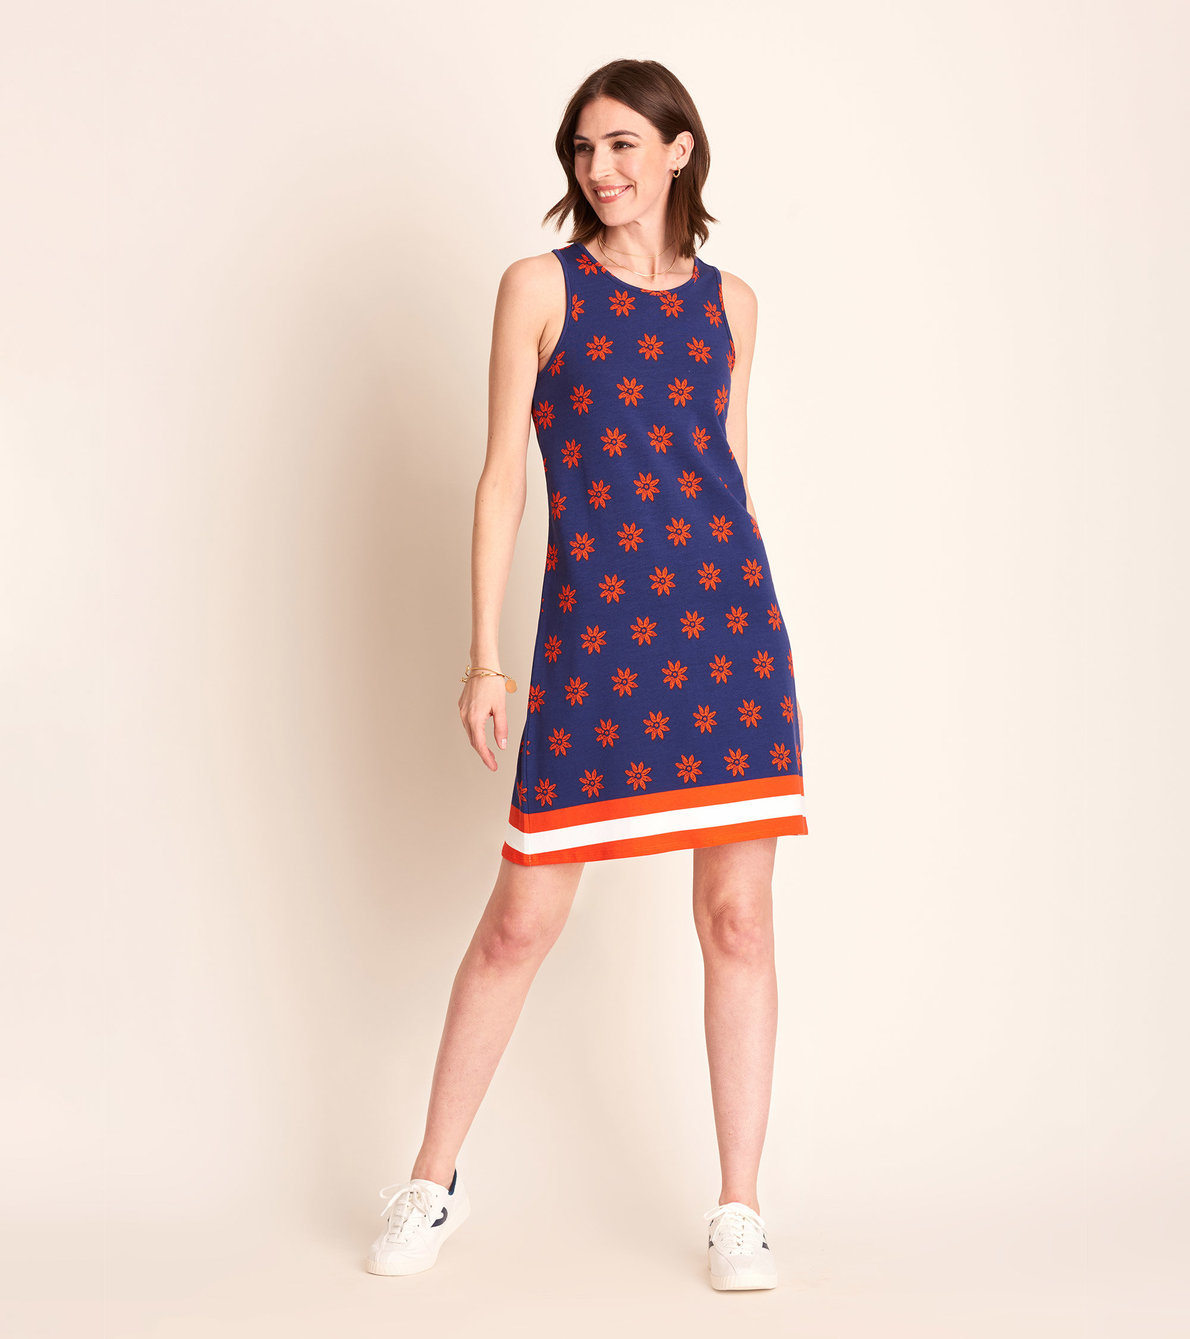 View larger image of Bella Tank Dress - Poppy Dots